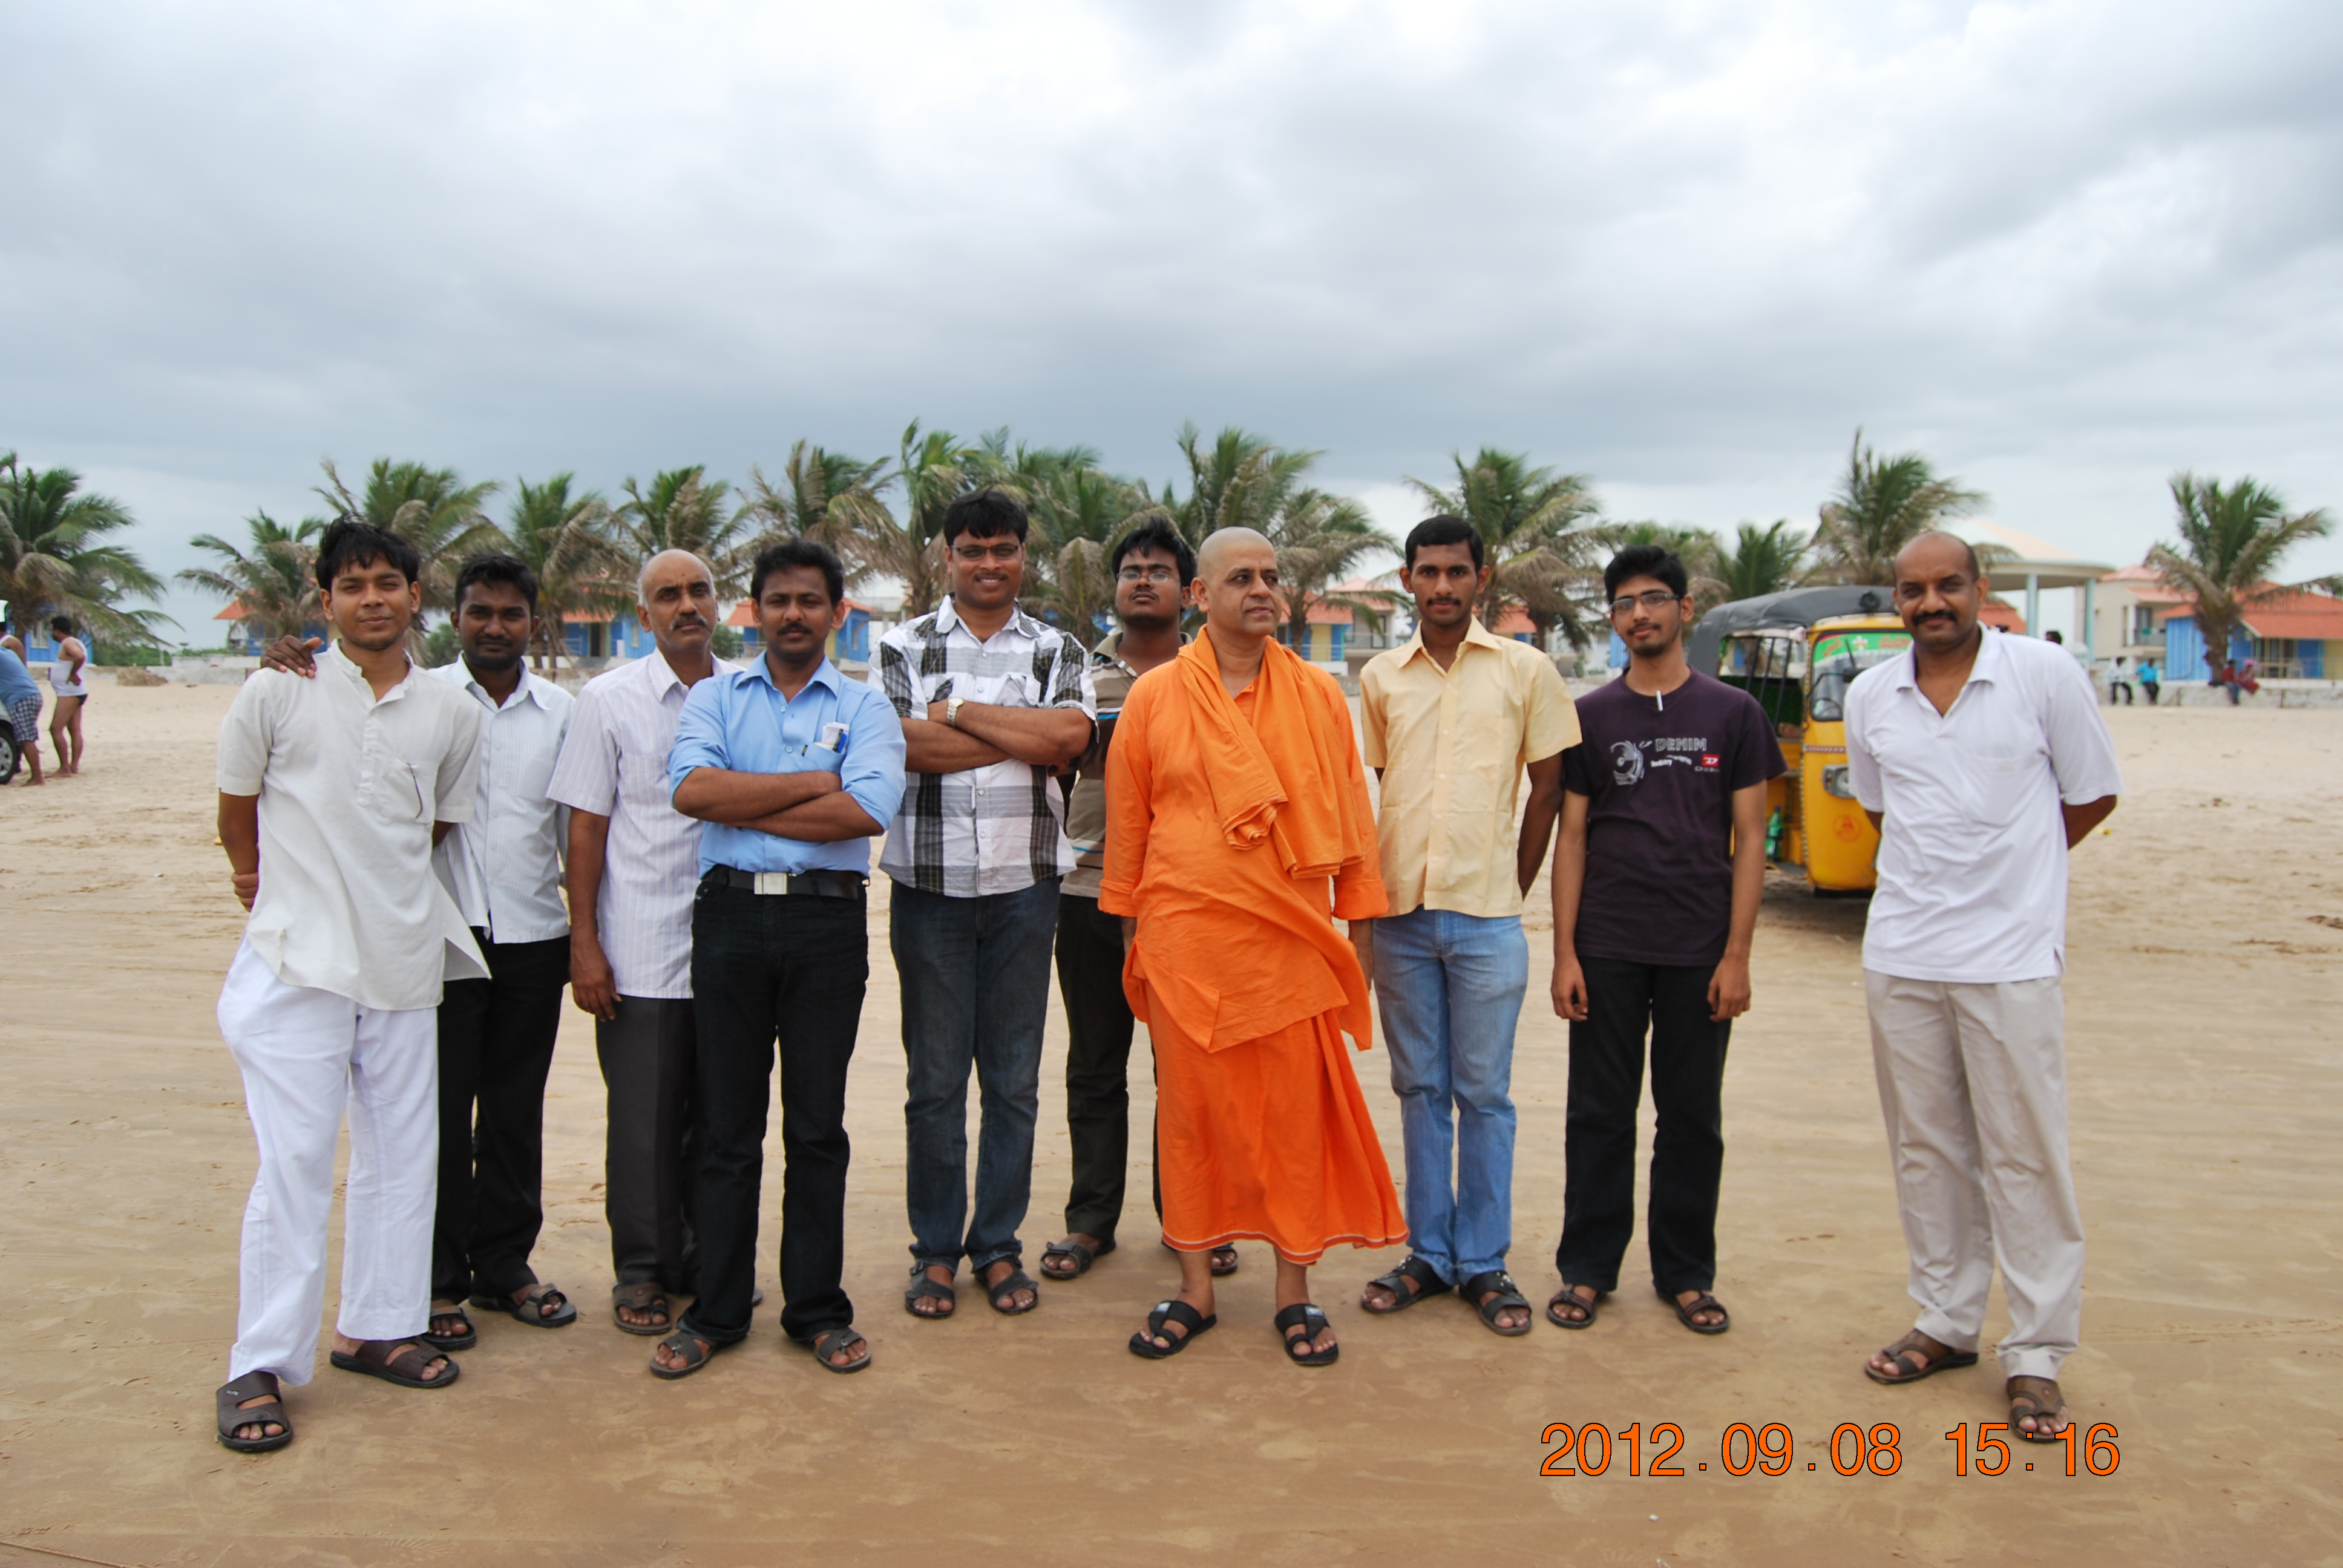 Rev. Swami Atmashraddhanandaji Maharaj at Suryalanka Beach with youth members.